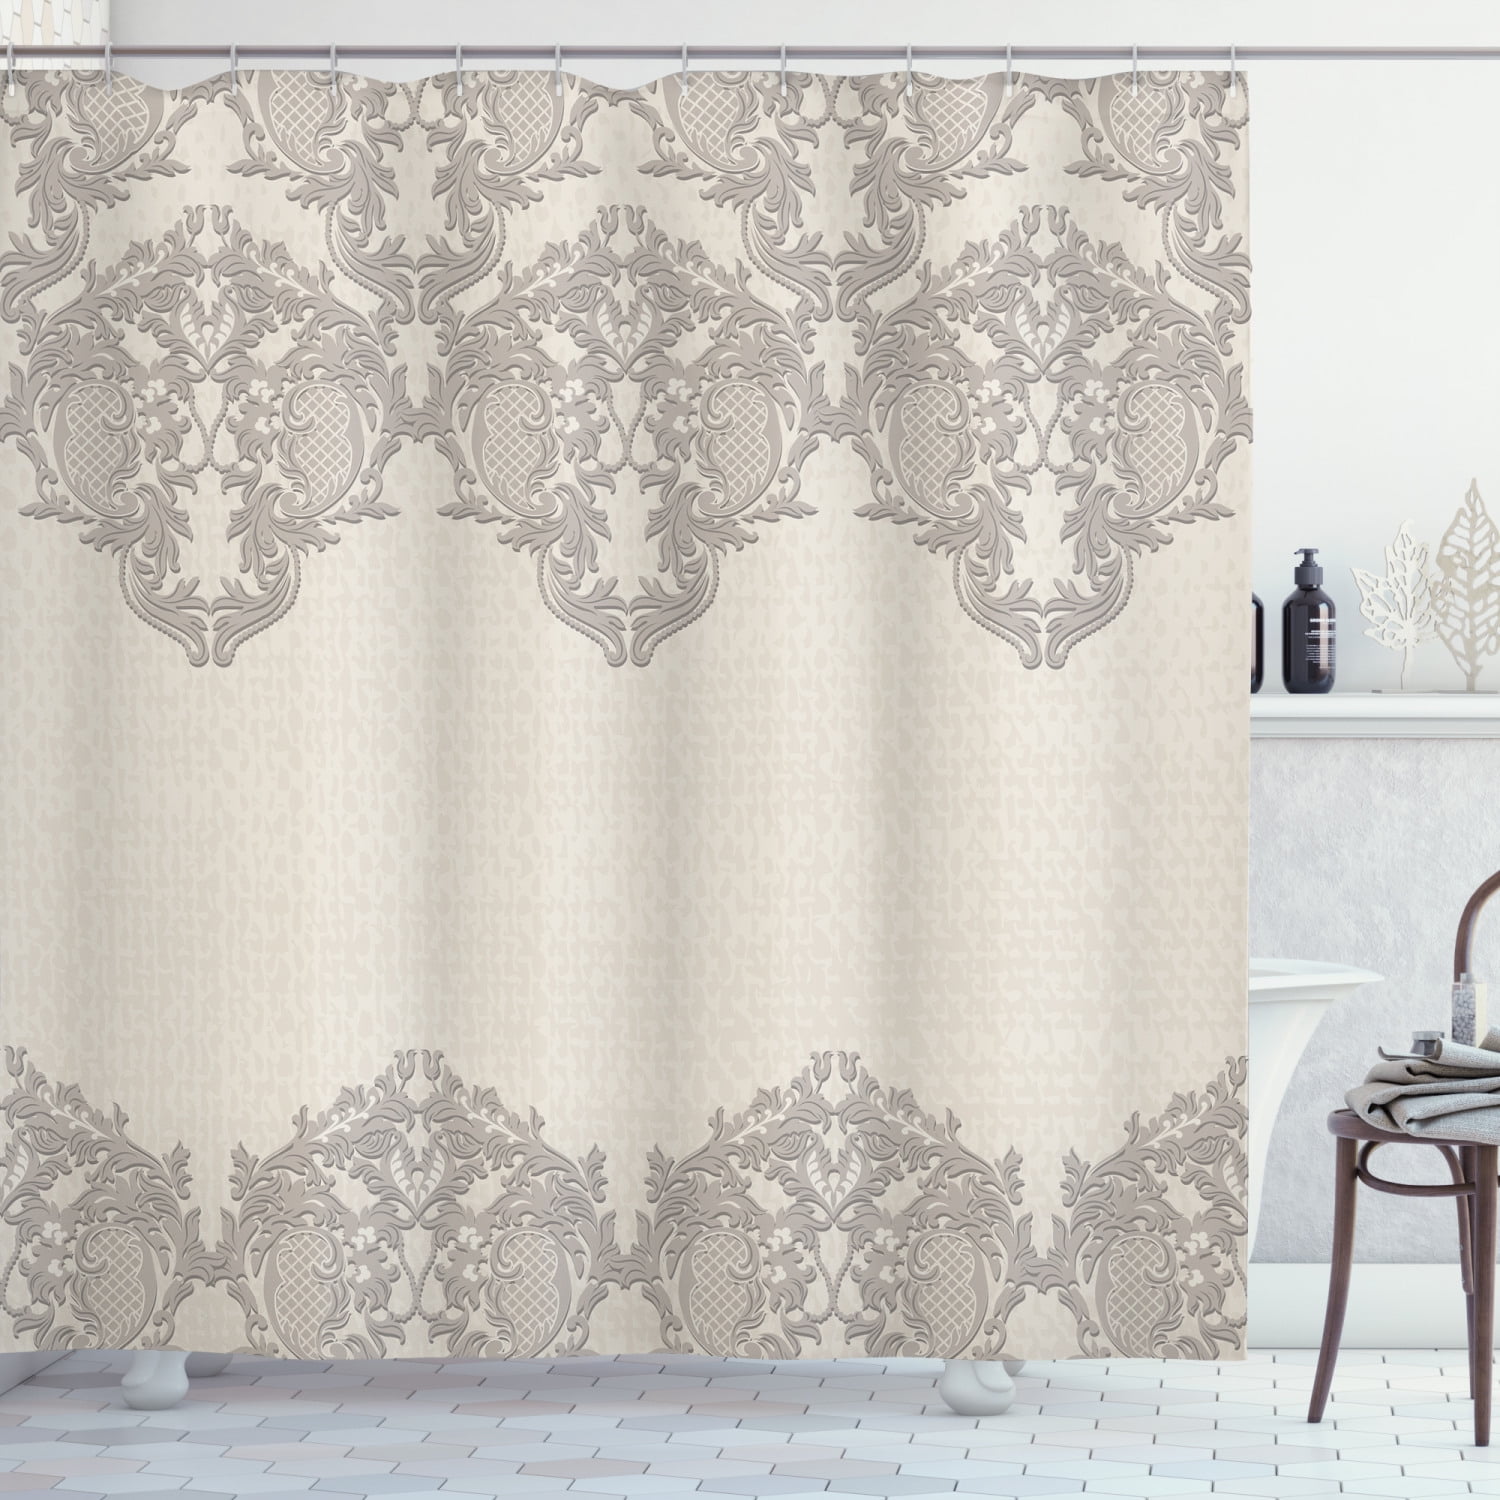 Retro Bronze Delicate Rose Bathroom Shower Curtain Liner Waterproof Fabric Hooks 